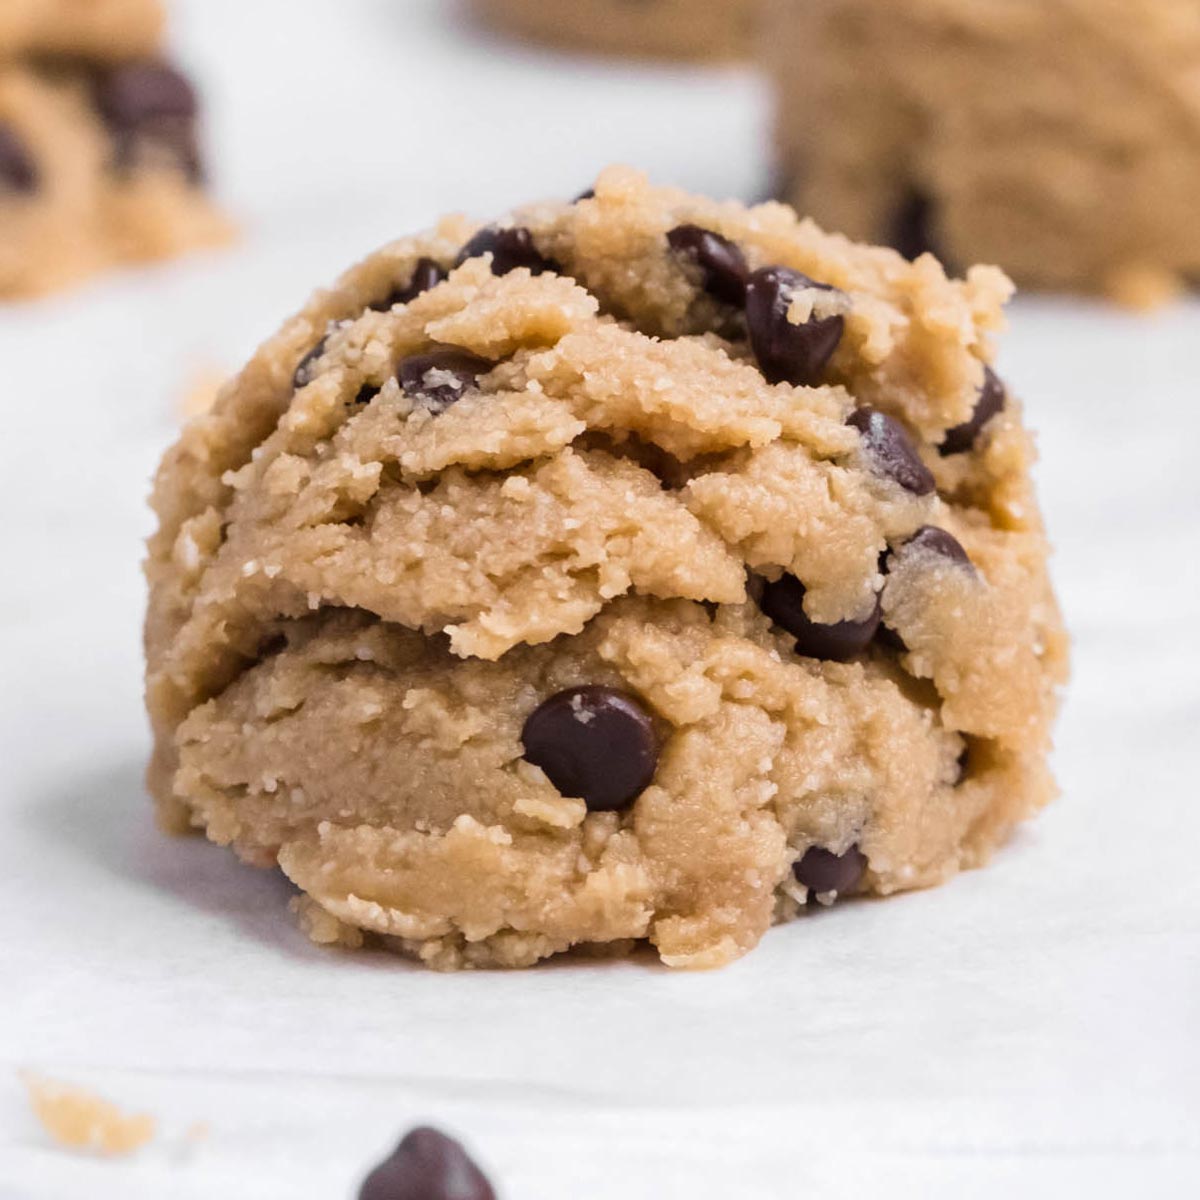 https://runningonrealfood.com/wp-content/uploads/2023/01/healthy-almond-flour-edible-cookie-dough-recipe-vegan-gluten-free-5-minutes.jpg